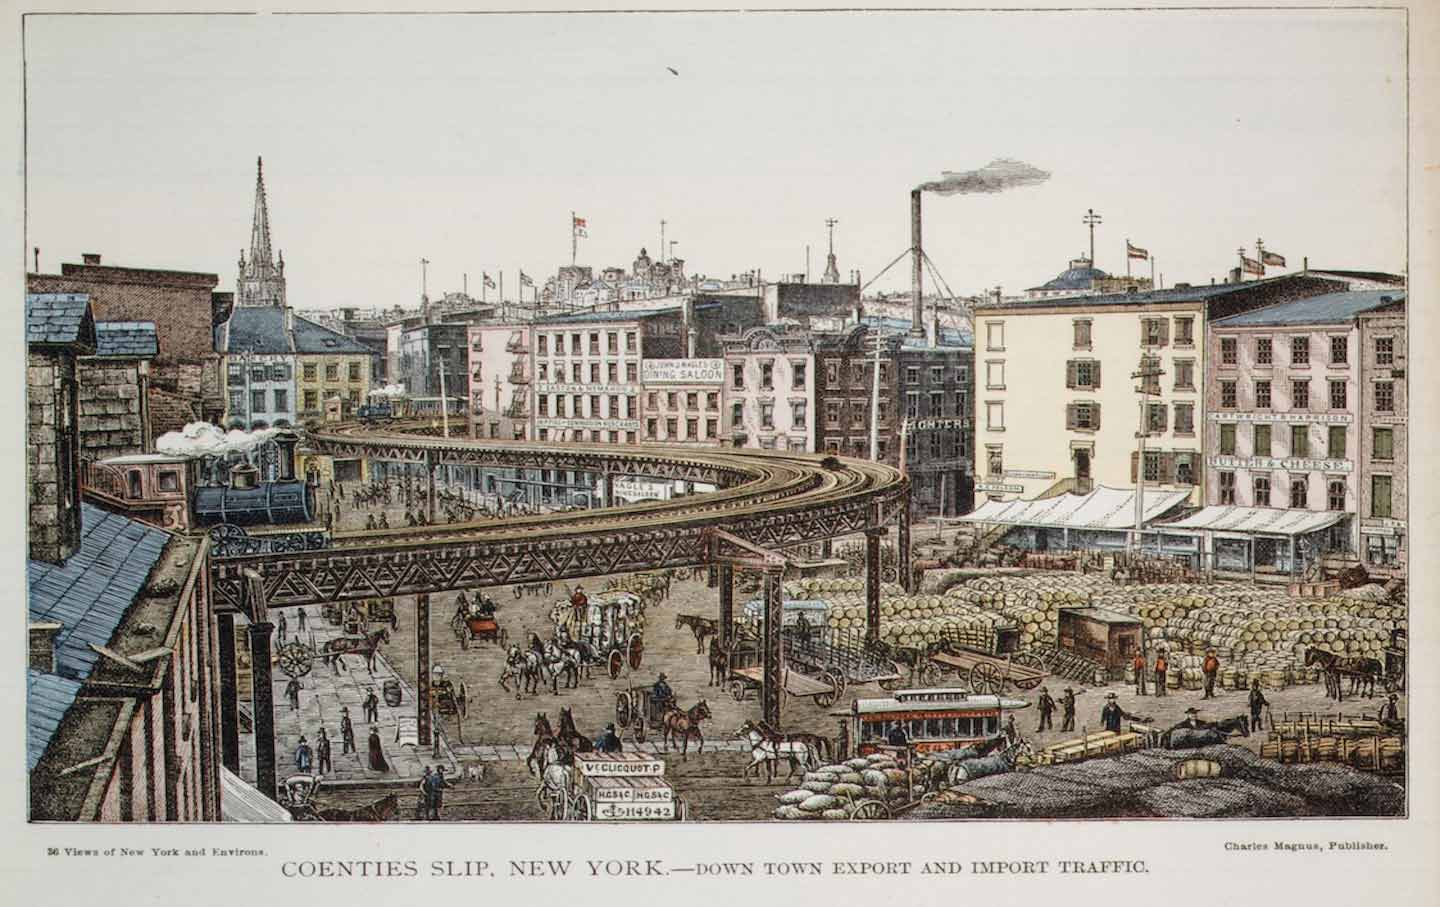 Coenties Slip in New York, 1850–1900.